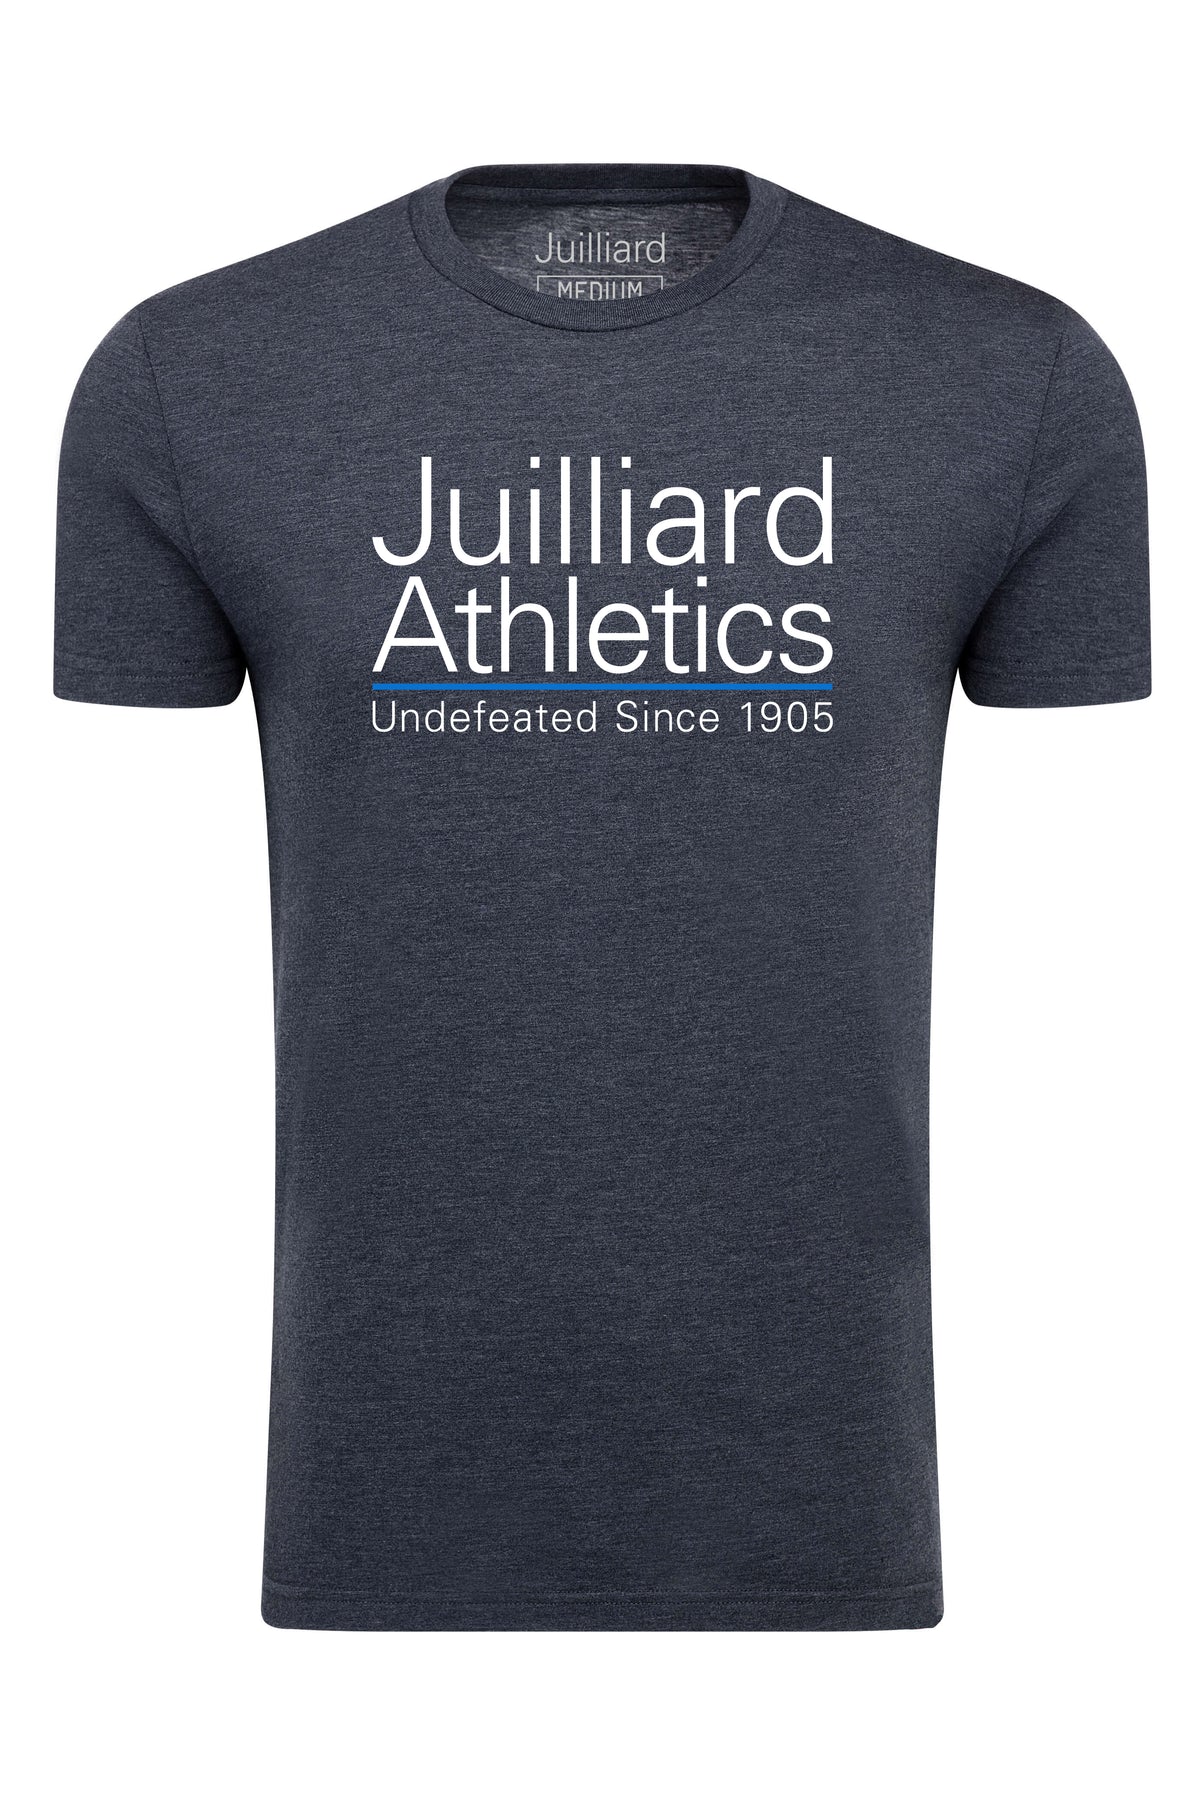 T-Shirt: Juilliard Athletics Undefeated (L & XL)